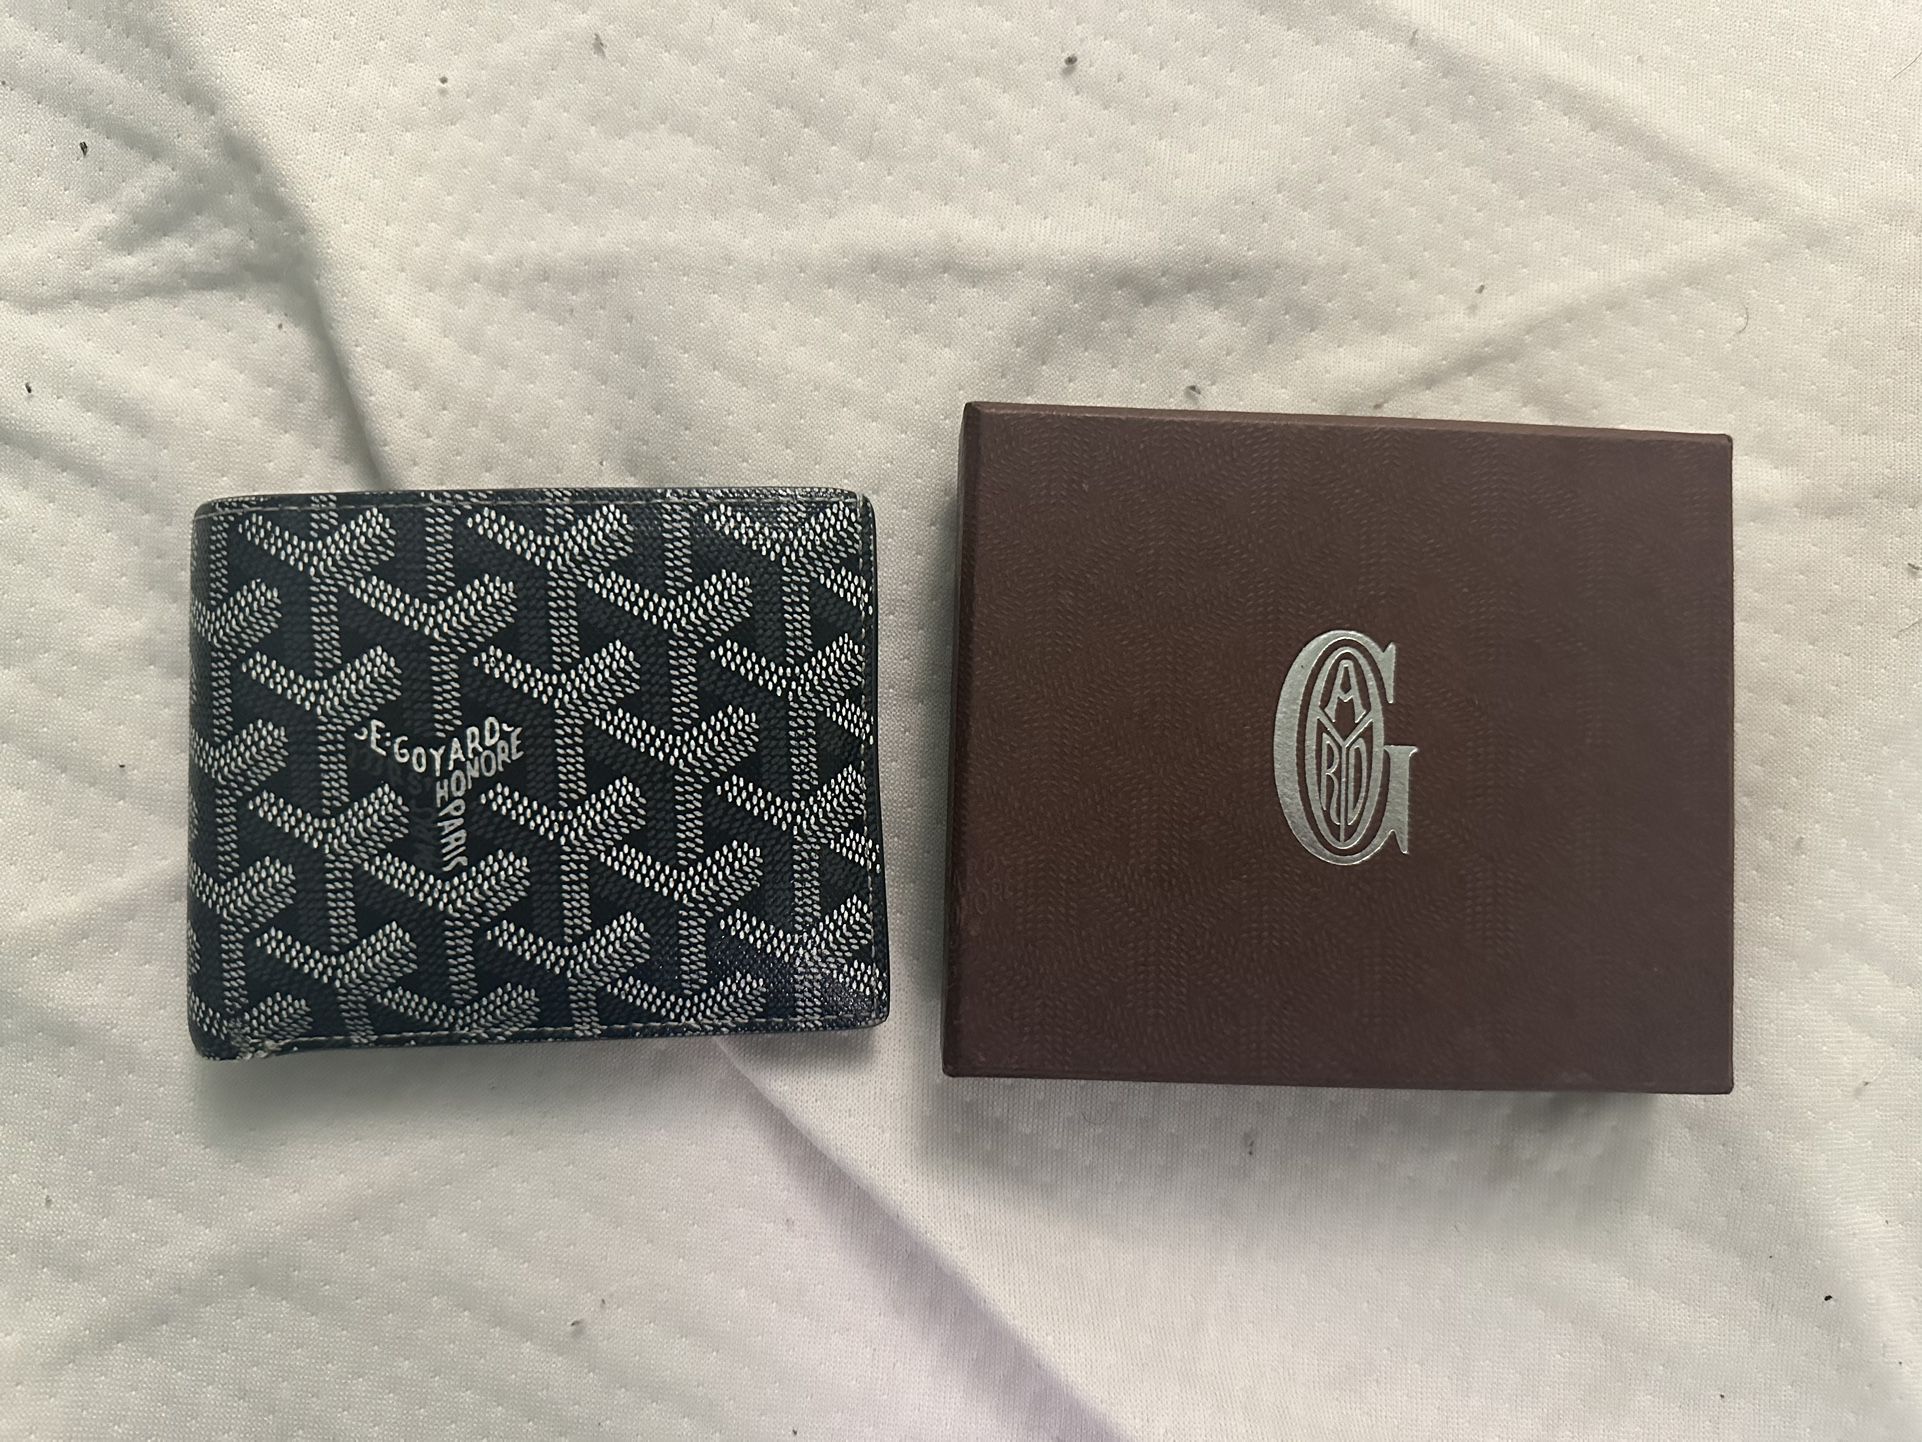 Victoire 8C wallet Black